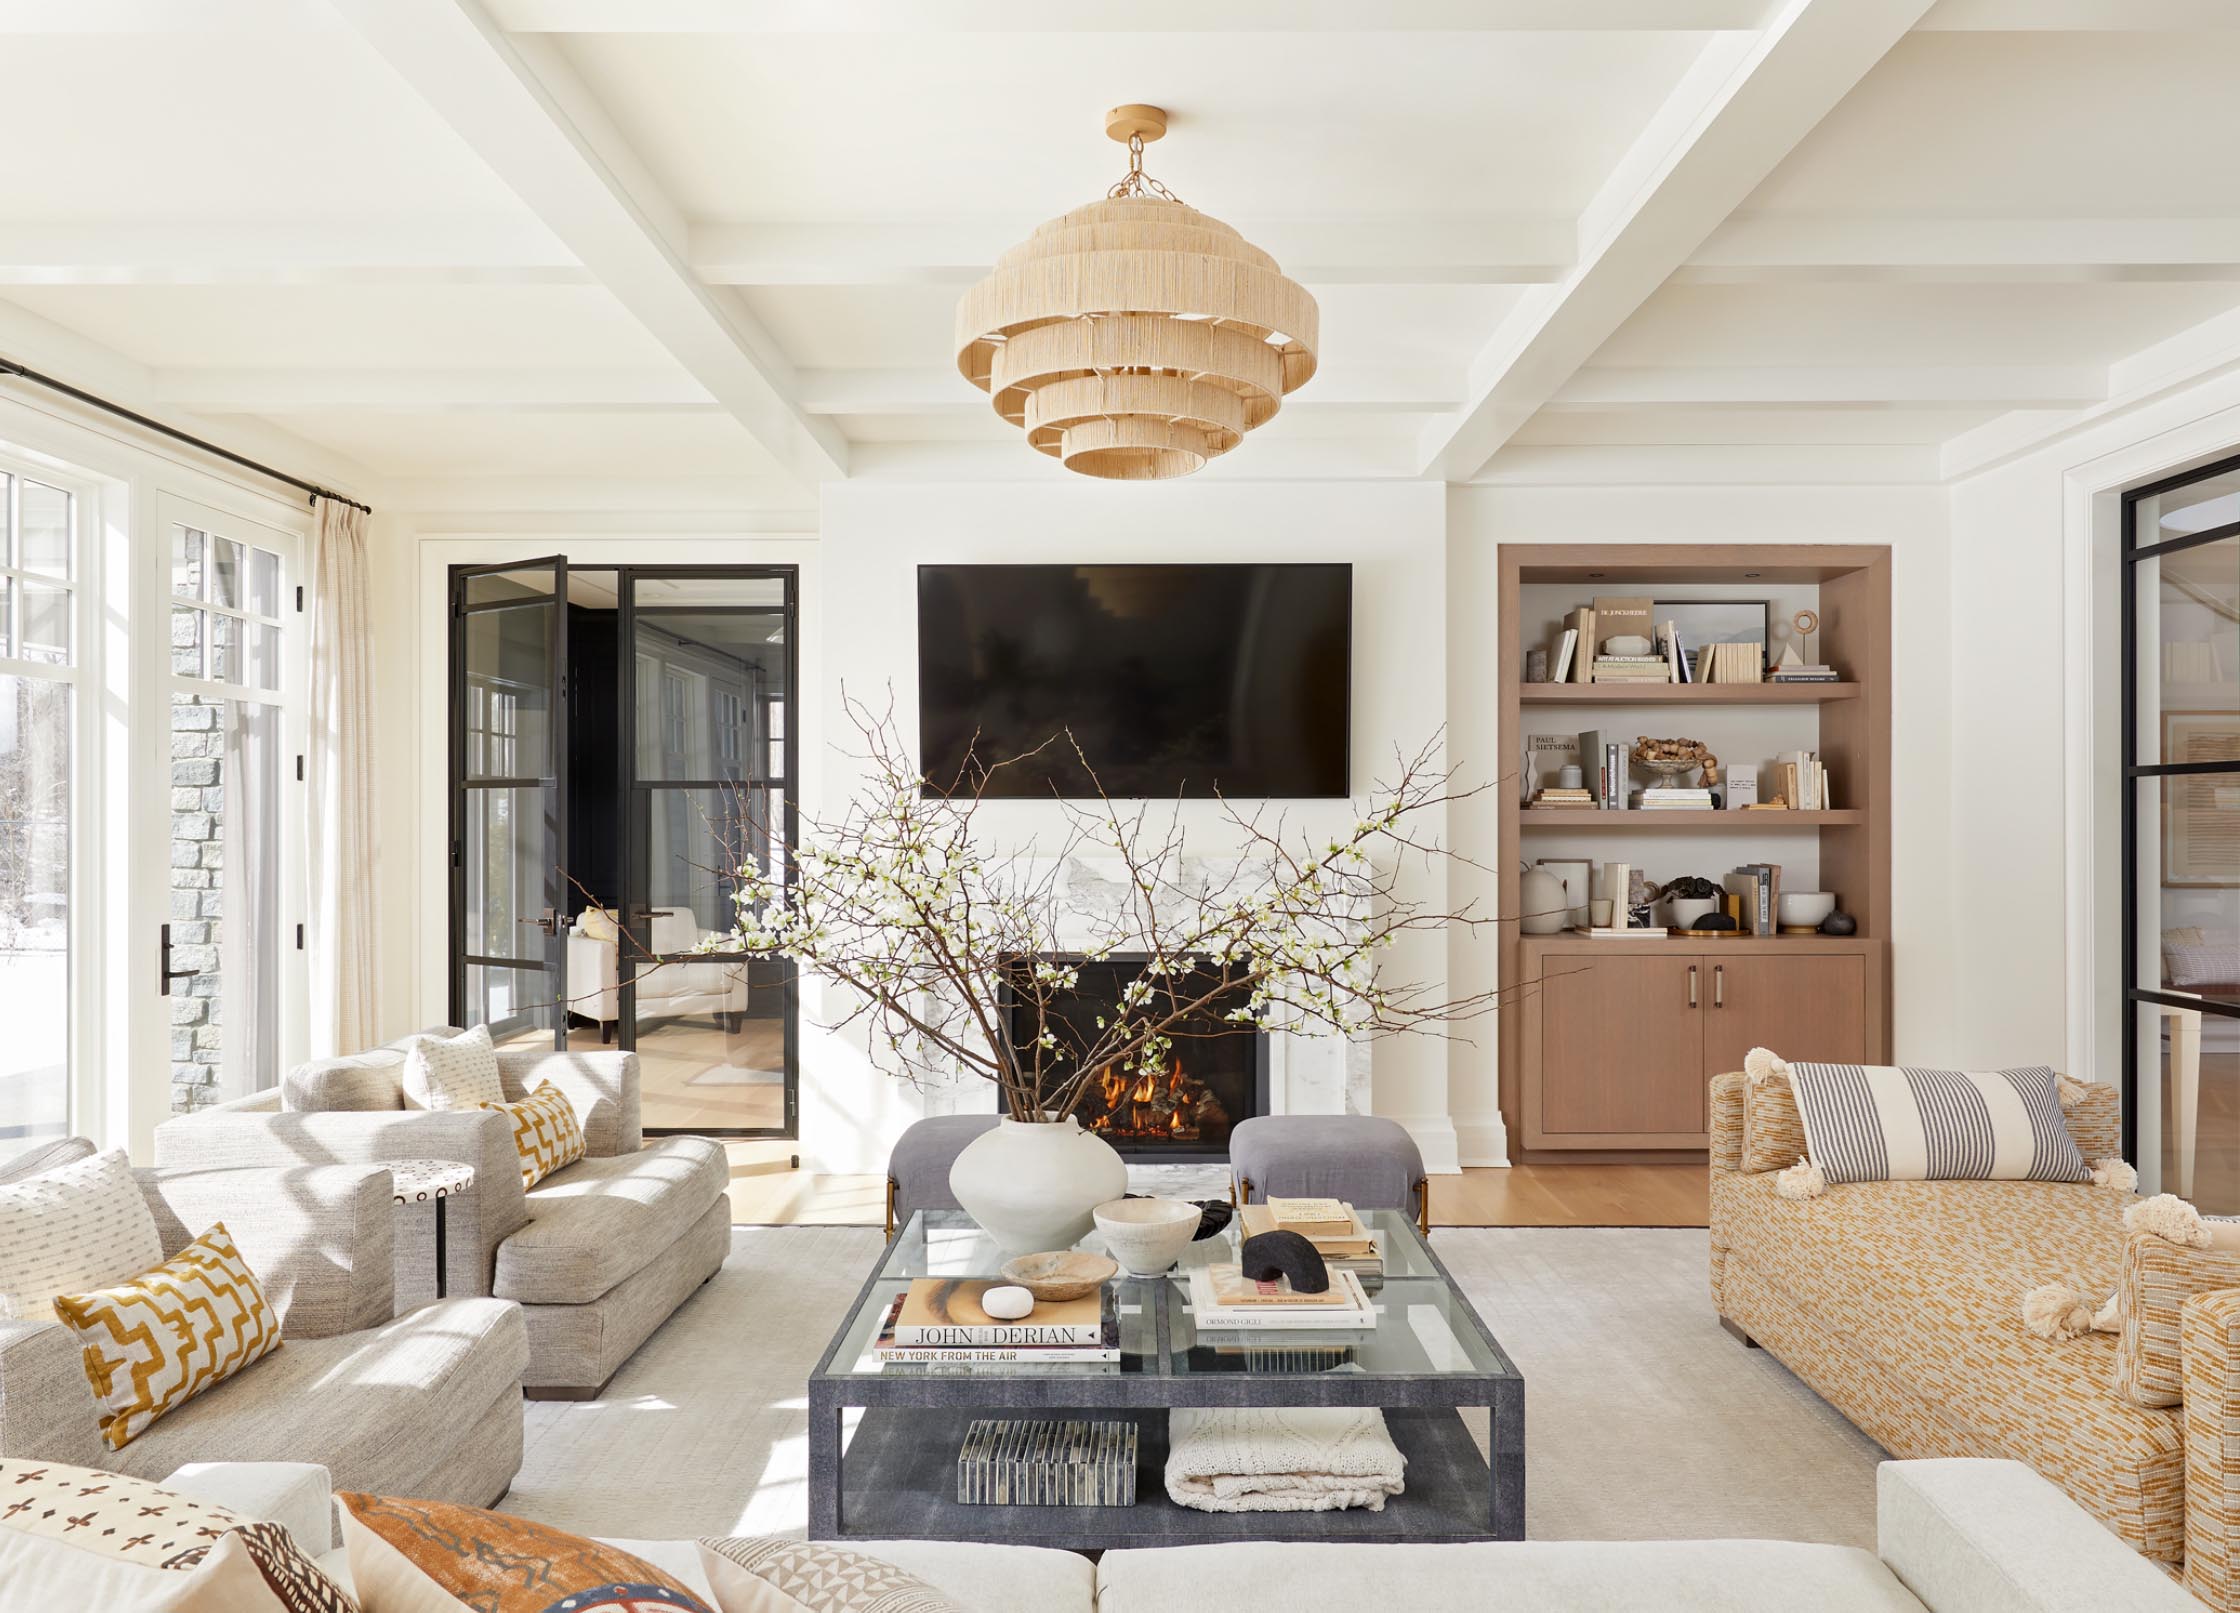 Luxury Furniture Design in a Living Room by Raychel Wade Design.jpg